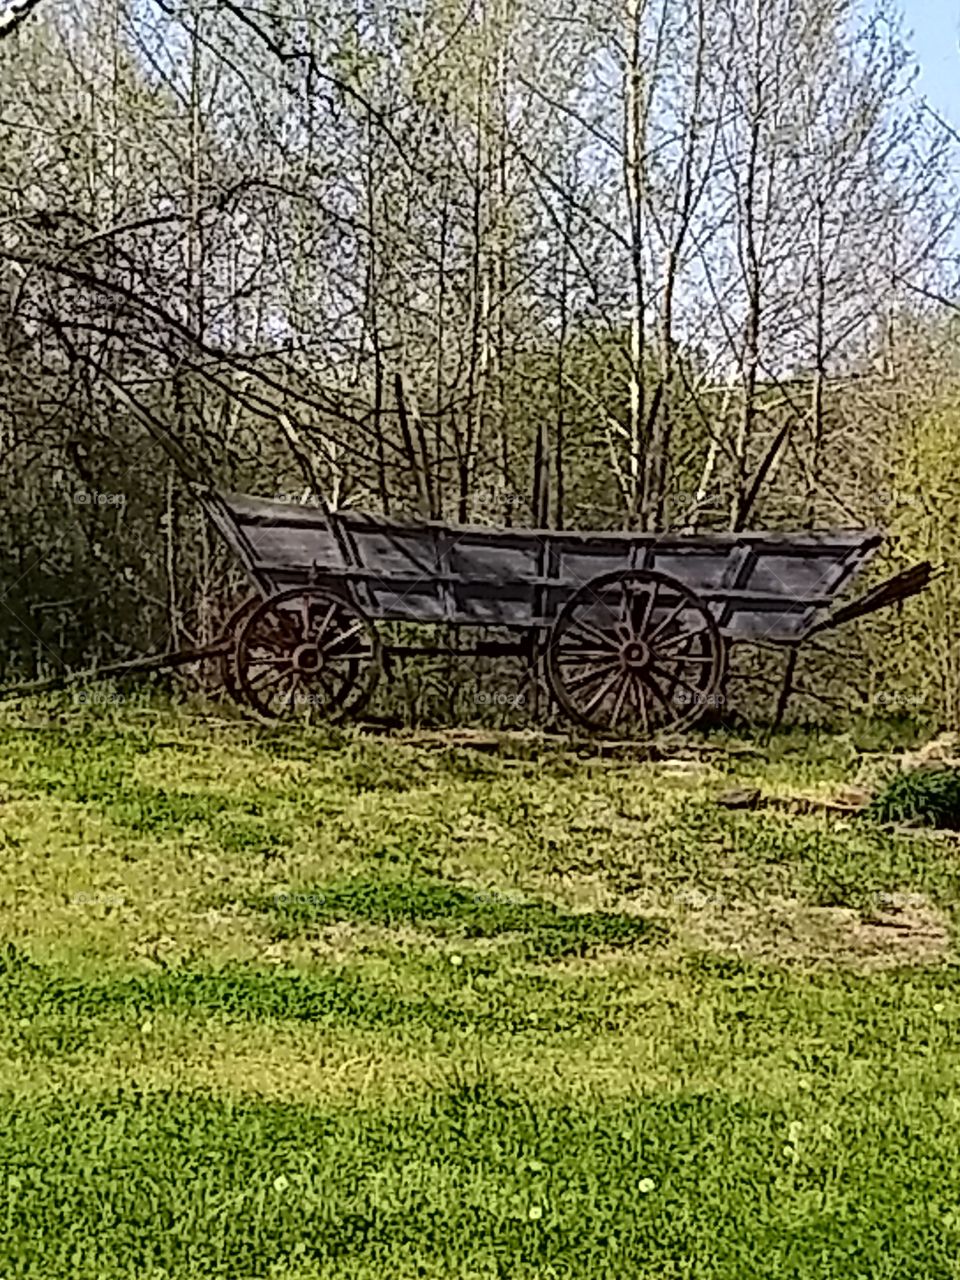 Santa Fe Trail, old wagon.  Missouri.